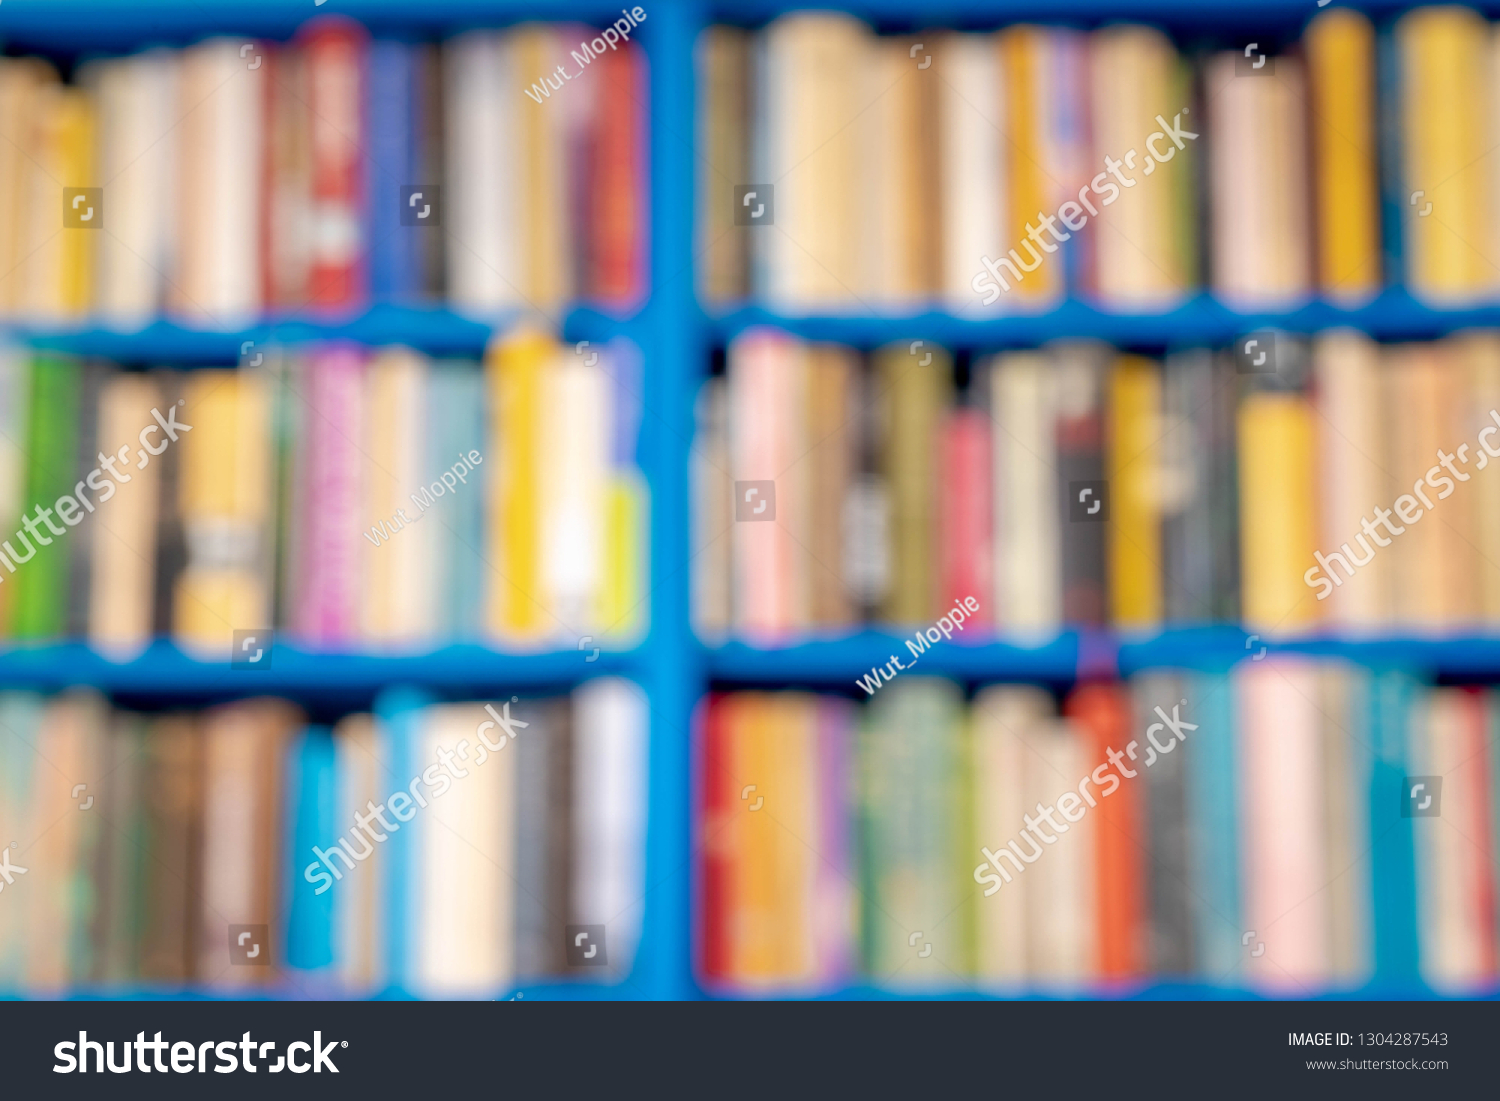 Education concept, Abstract blurred bookshelf, Blur bookshelves background, Books texture, Bookshelf background. #1304287543